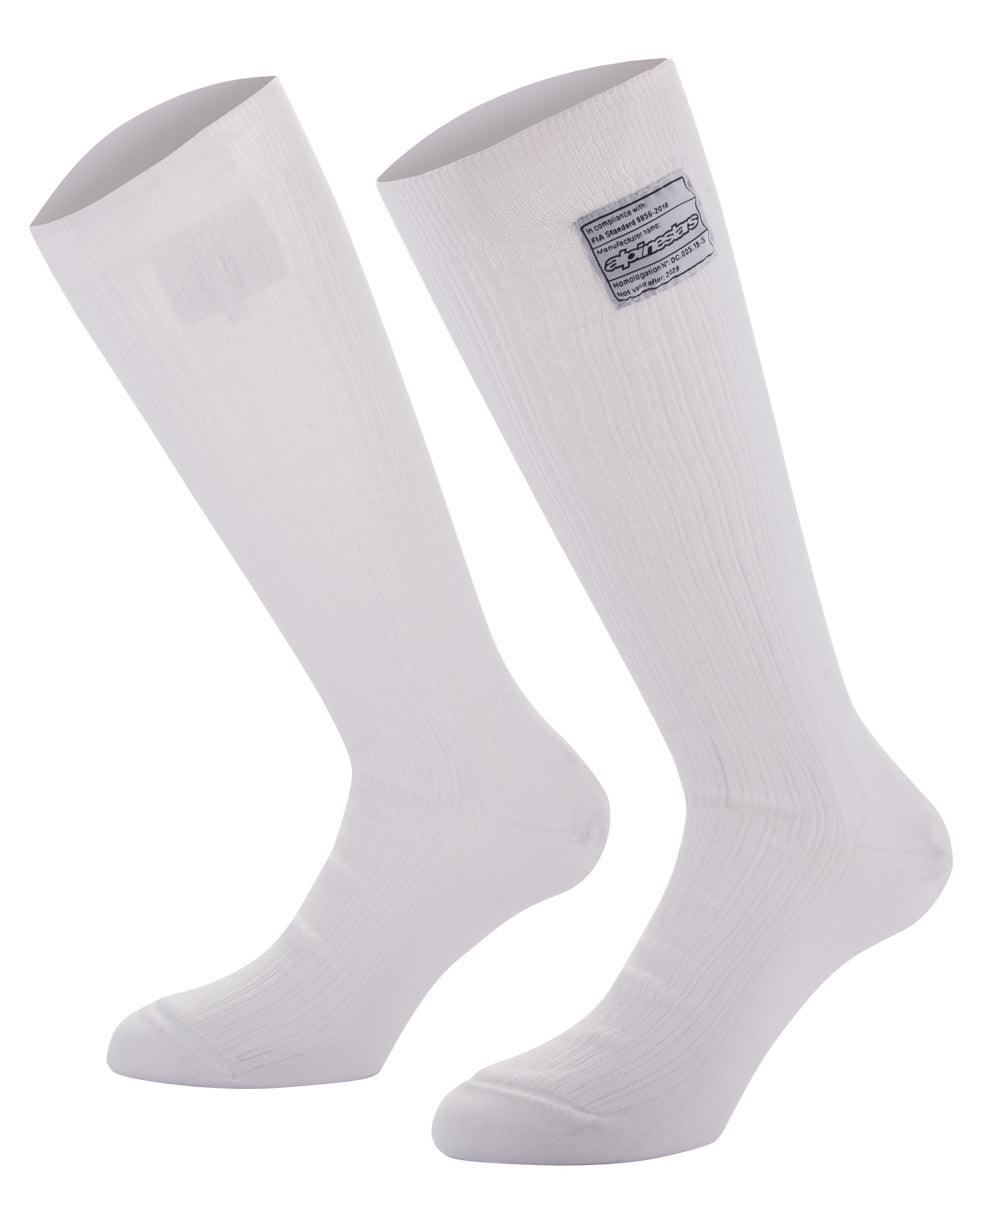 Socks Race V4 White Large - Burlile Performance Products